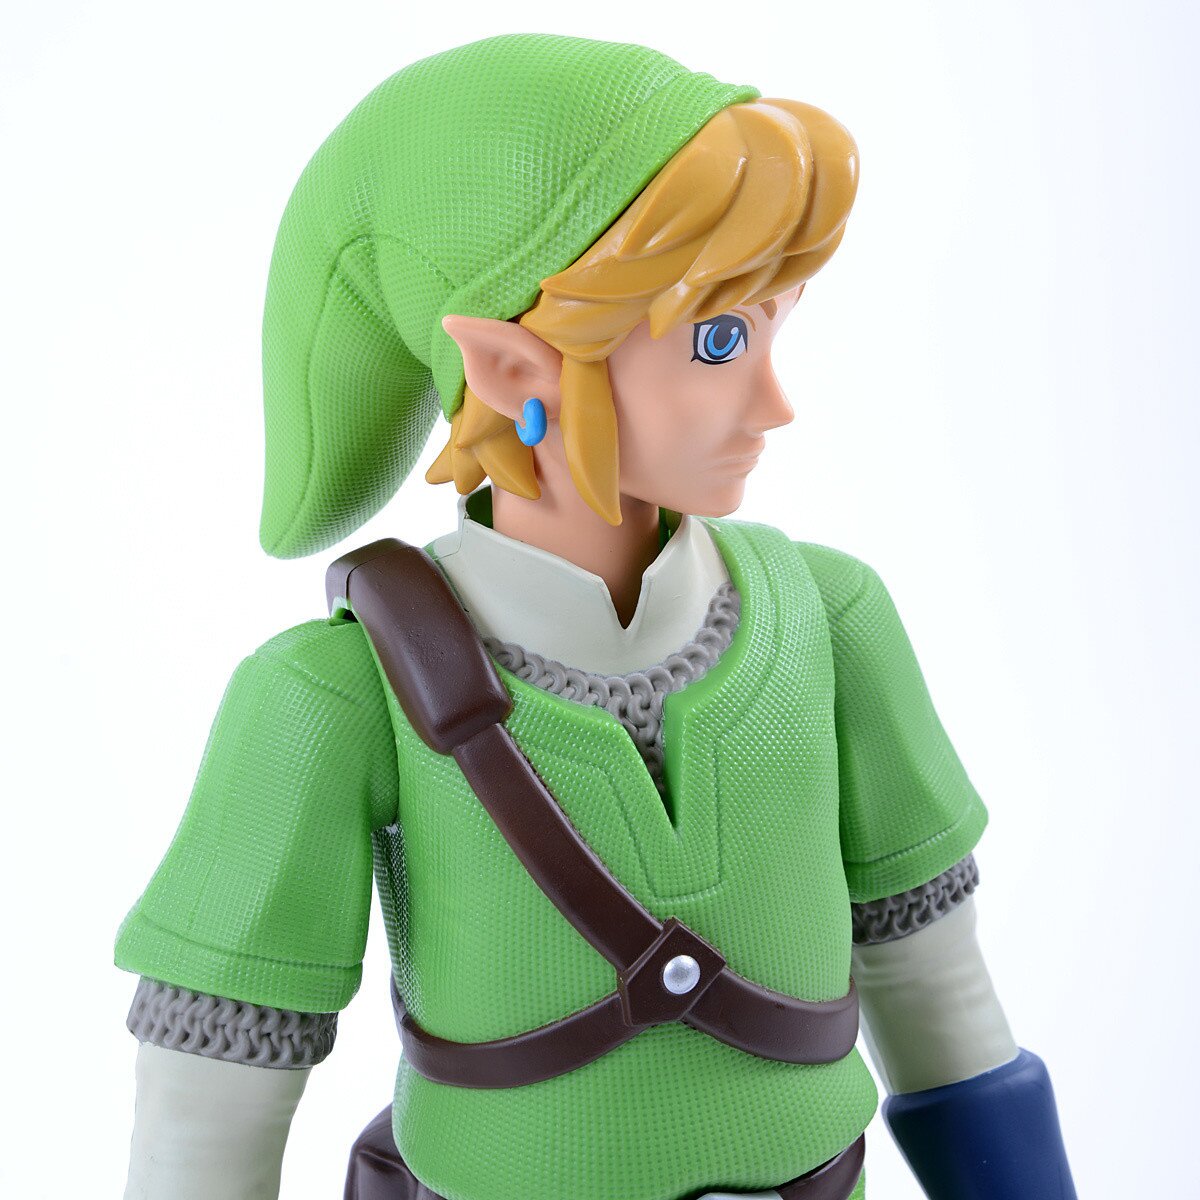 The Legend of Zelda: The Wind Waker Collector's Puzzle - Tokyo Otaku Mode  (TOM)